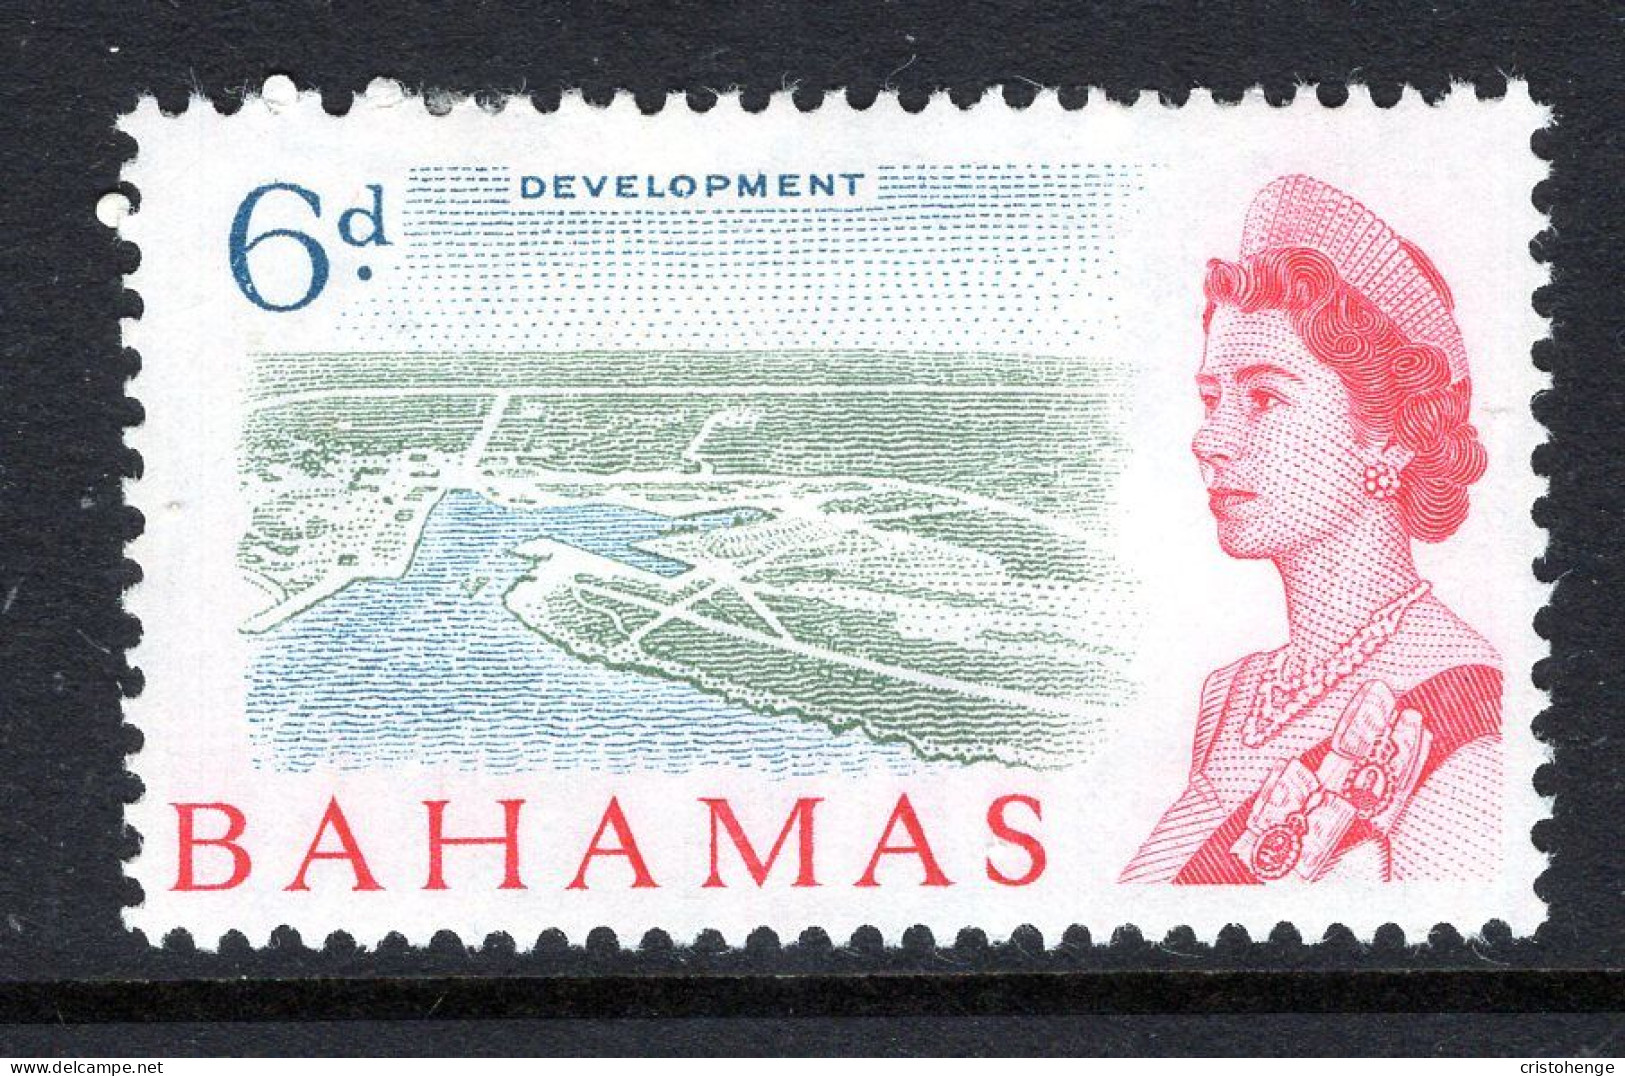 Bahamas 1965 Pictorials - 6d Development HM (SG 253) - 1963-1973 Autonomia Interna